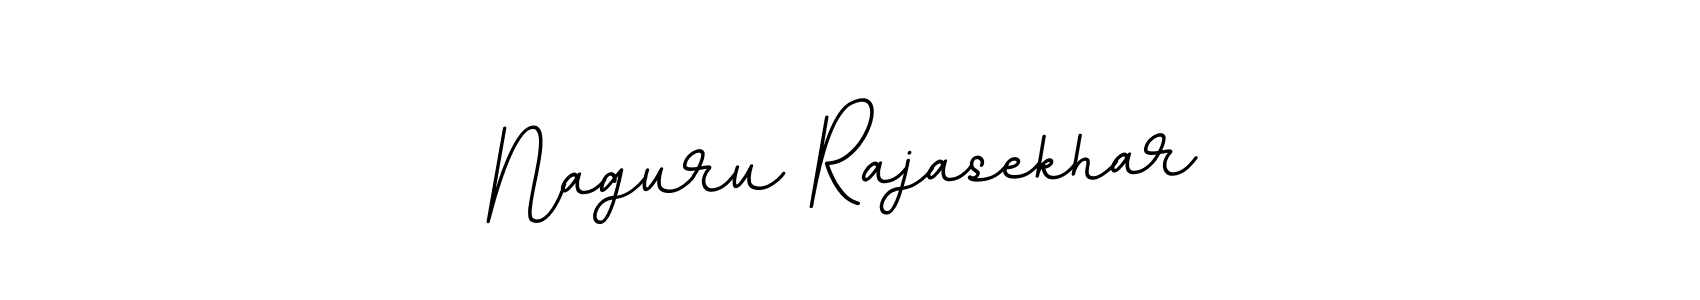 How to Draw Naguru Rajasekhar signature style? BallpointsItalic-DORy9 is a latest design signature styles for name Naguru Rajasekhar. Naguru Rajasekhar signature style 11 images and pictures png